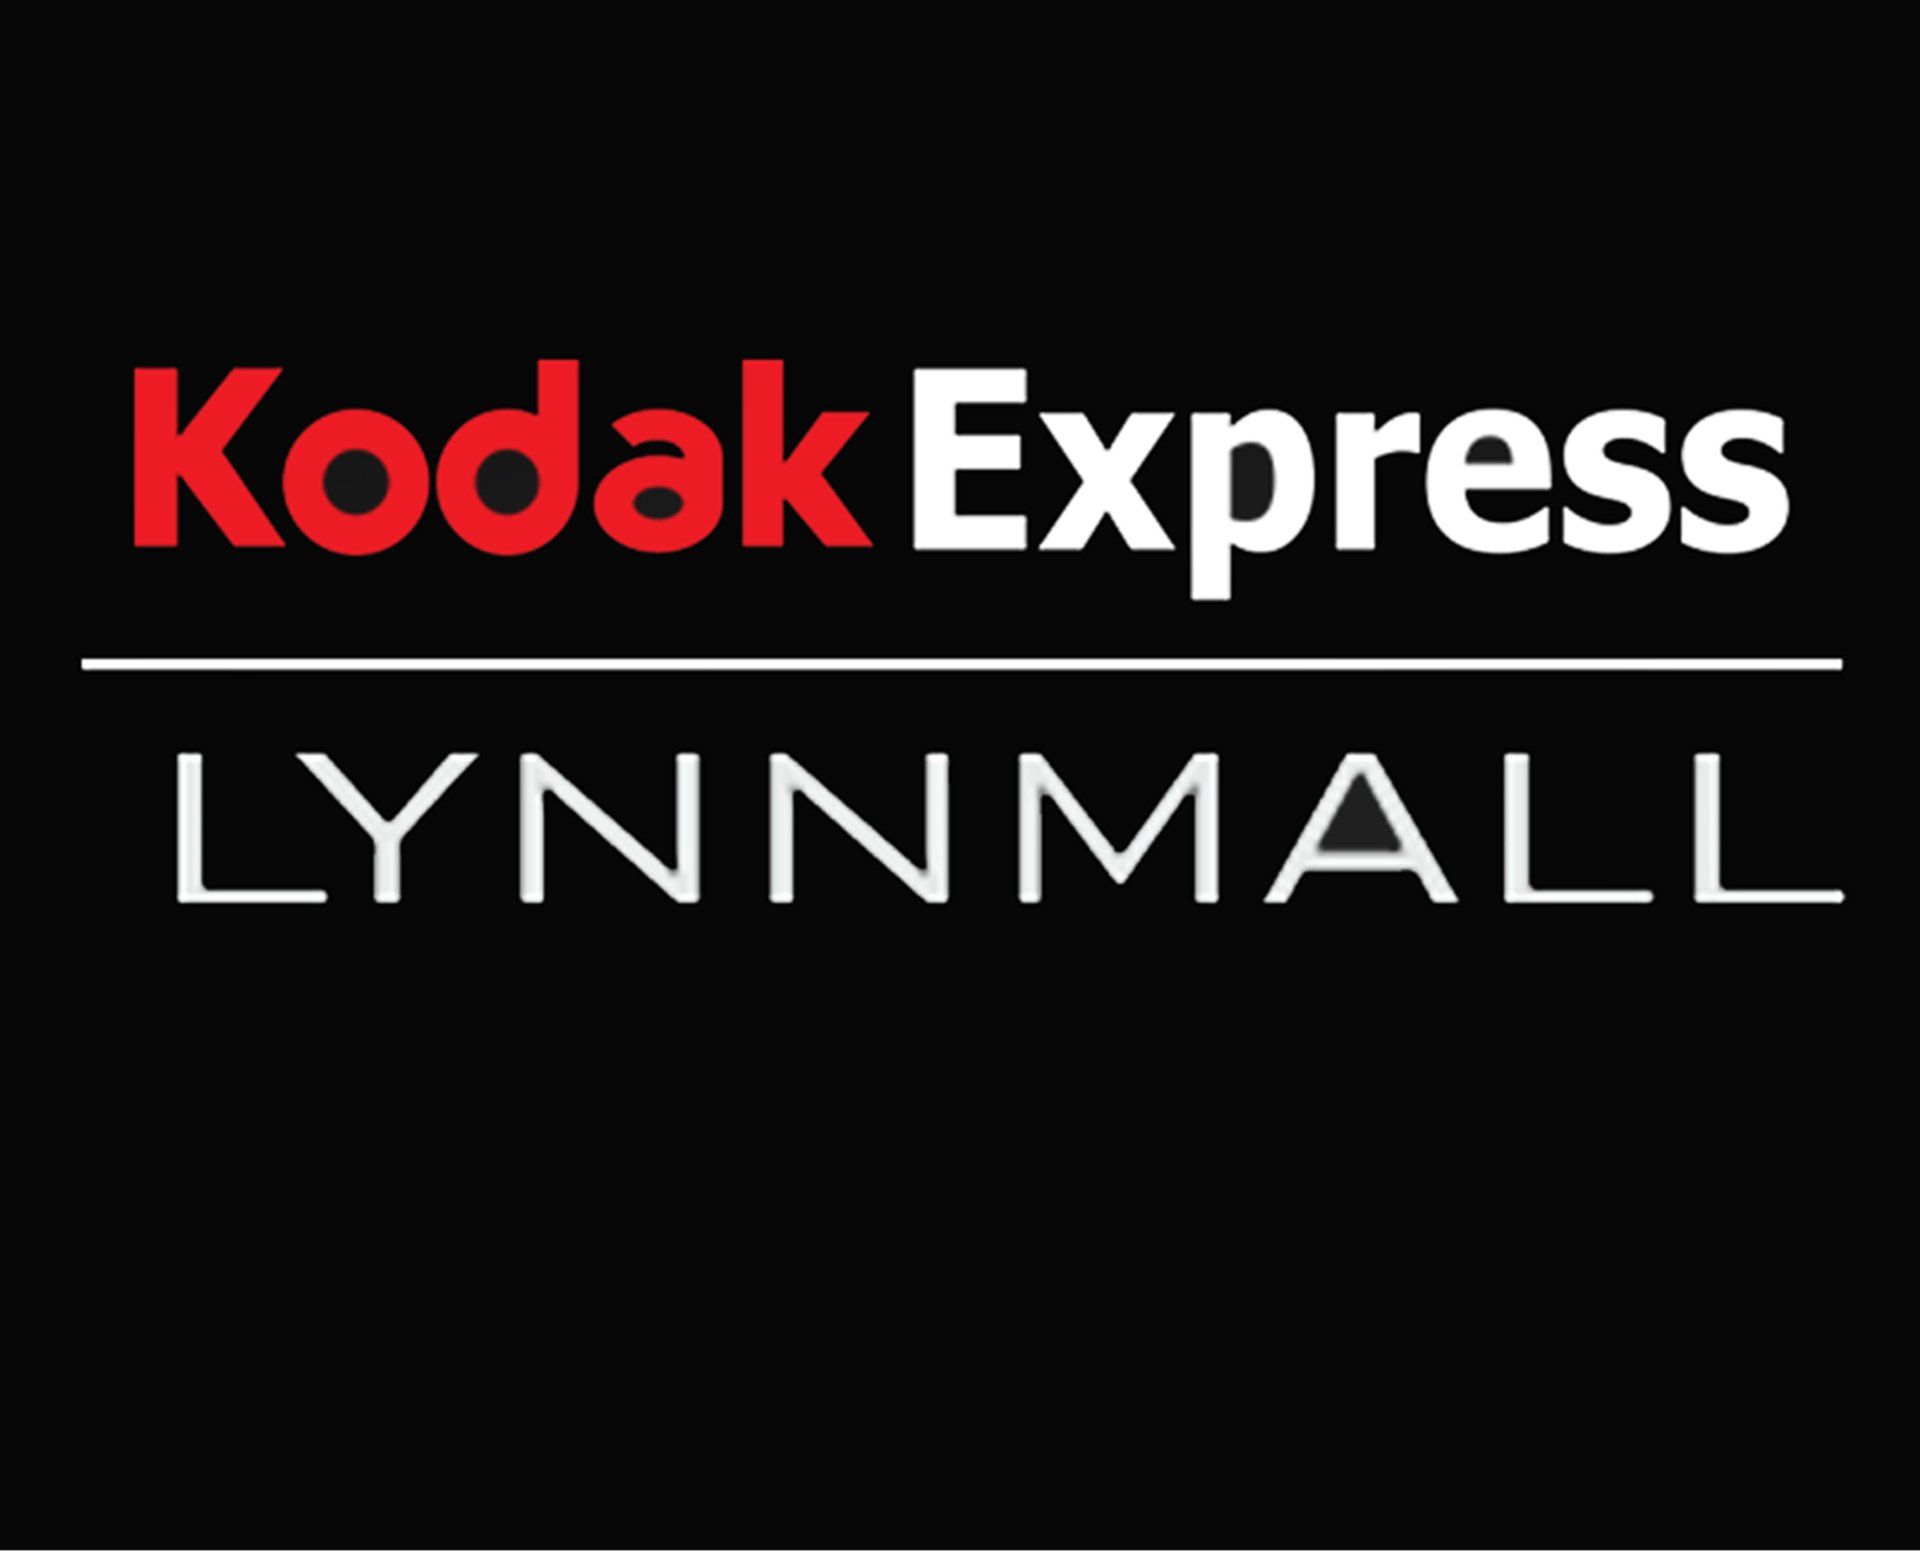 Kodak Express LynnMall